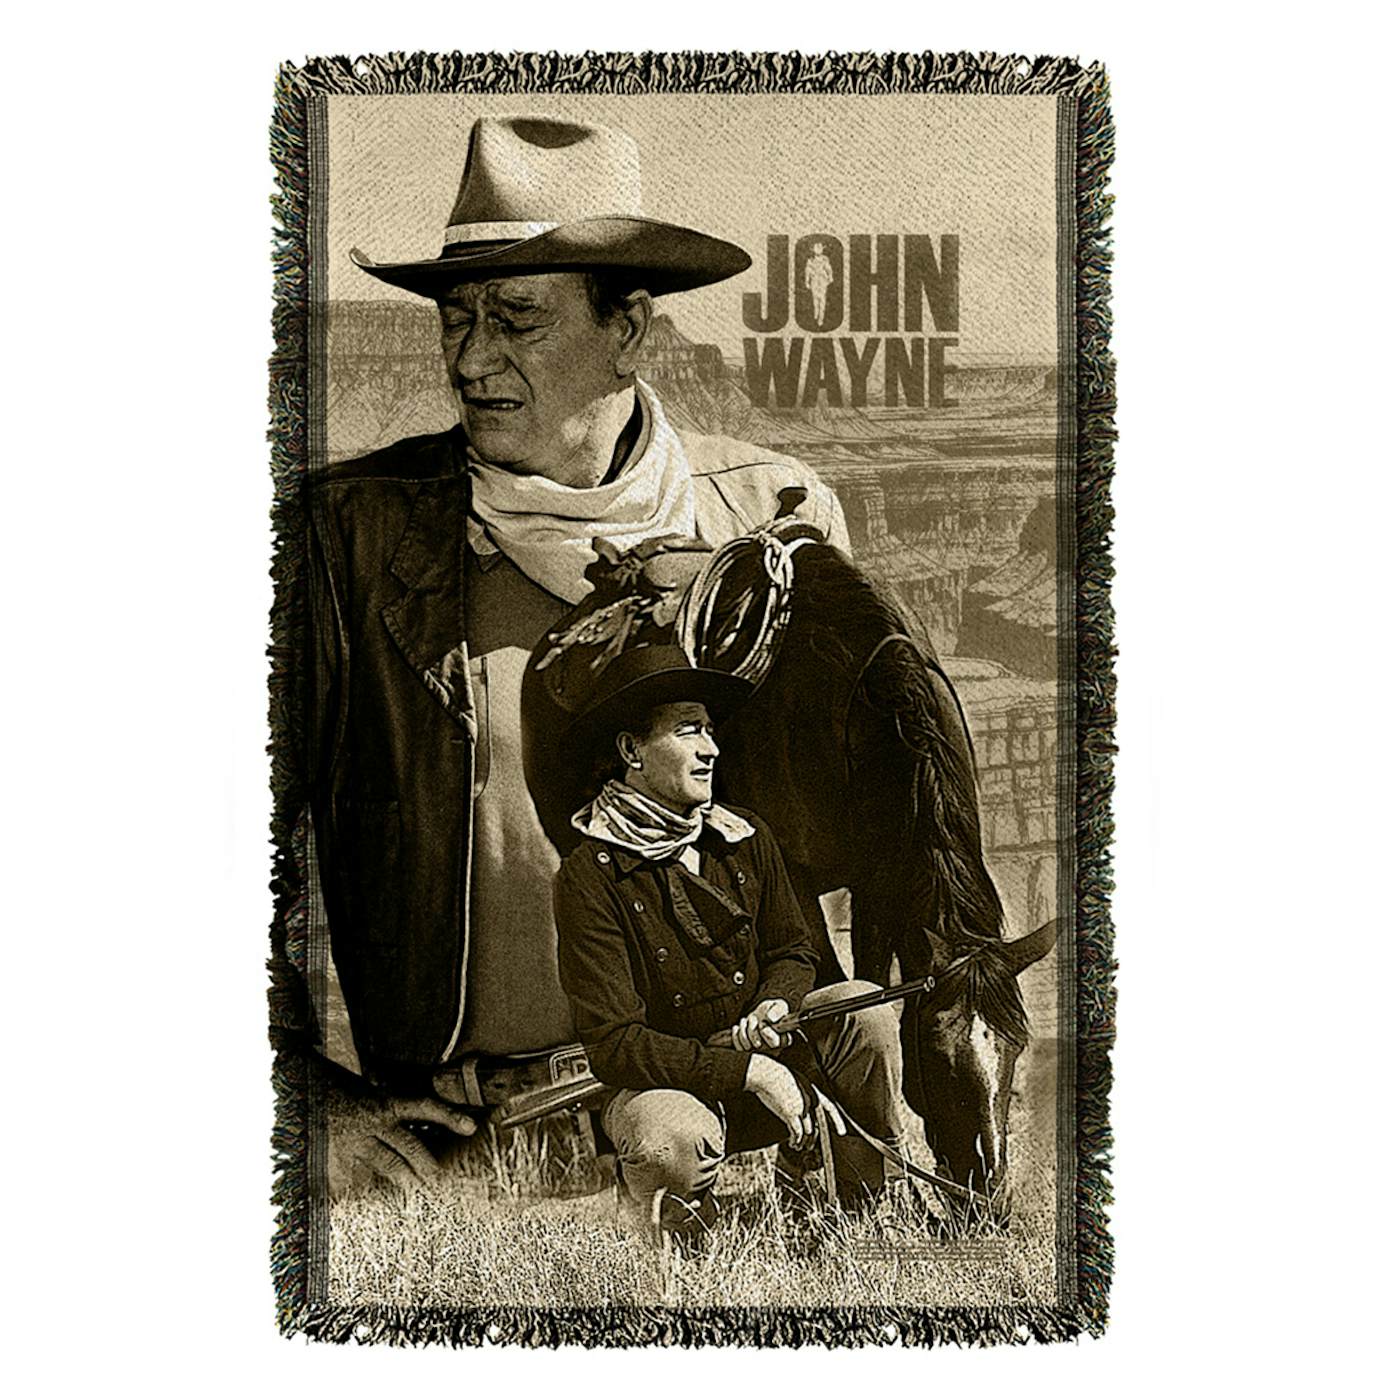 John Wayne Stoic Cowboy Woven Throw